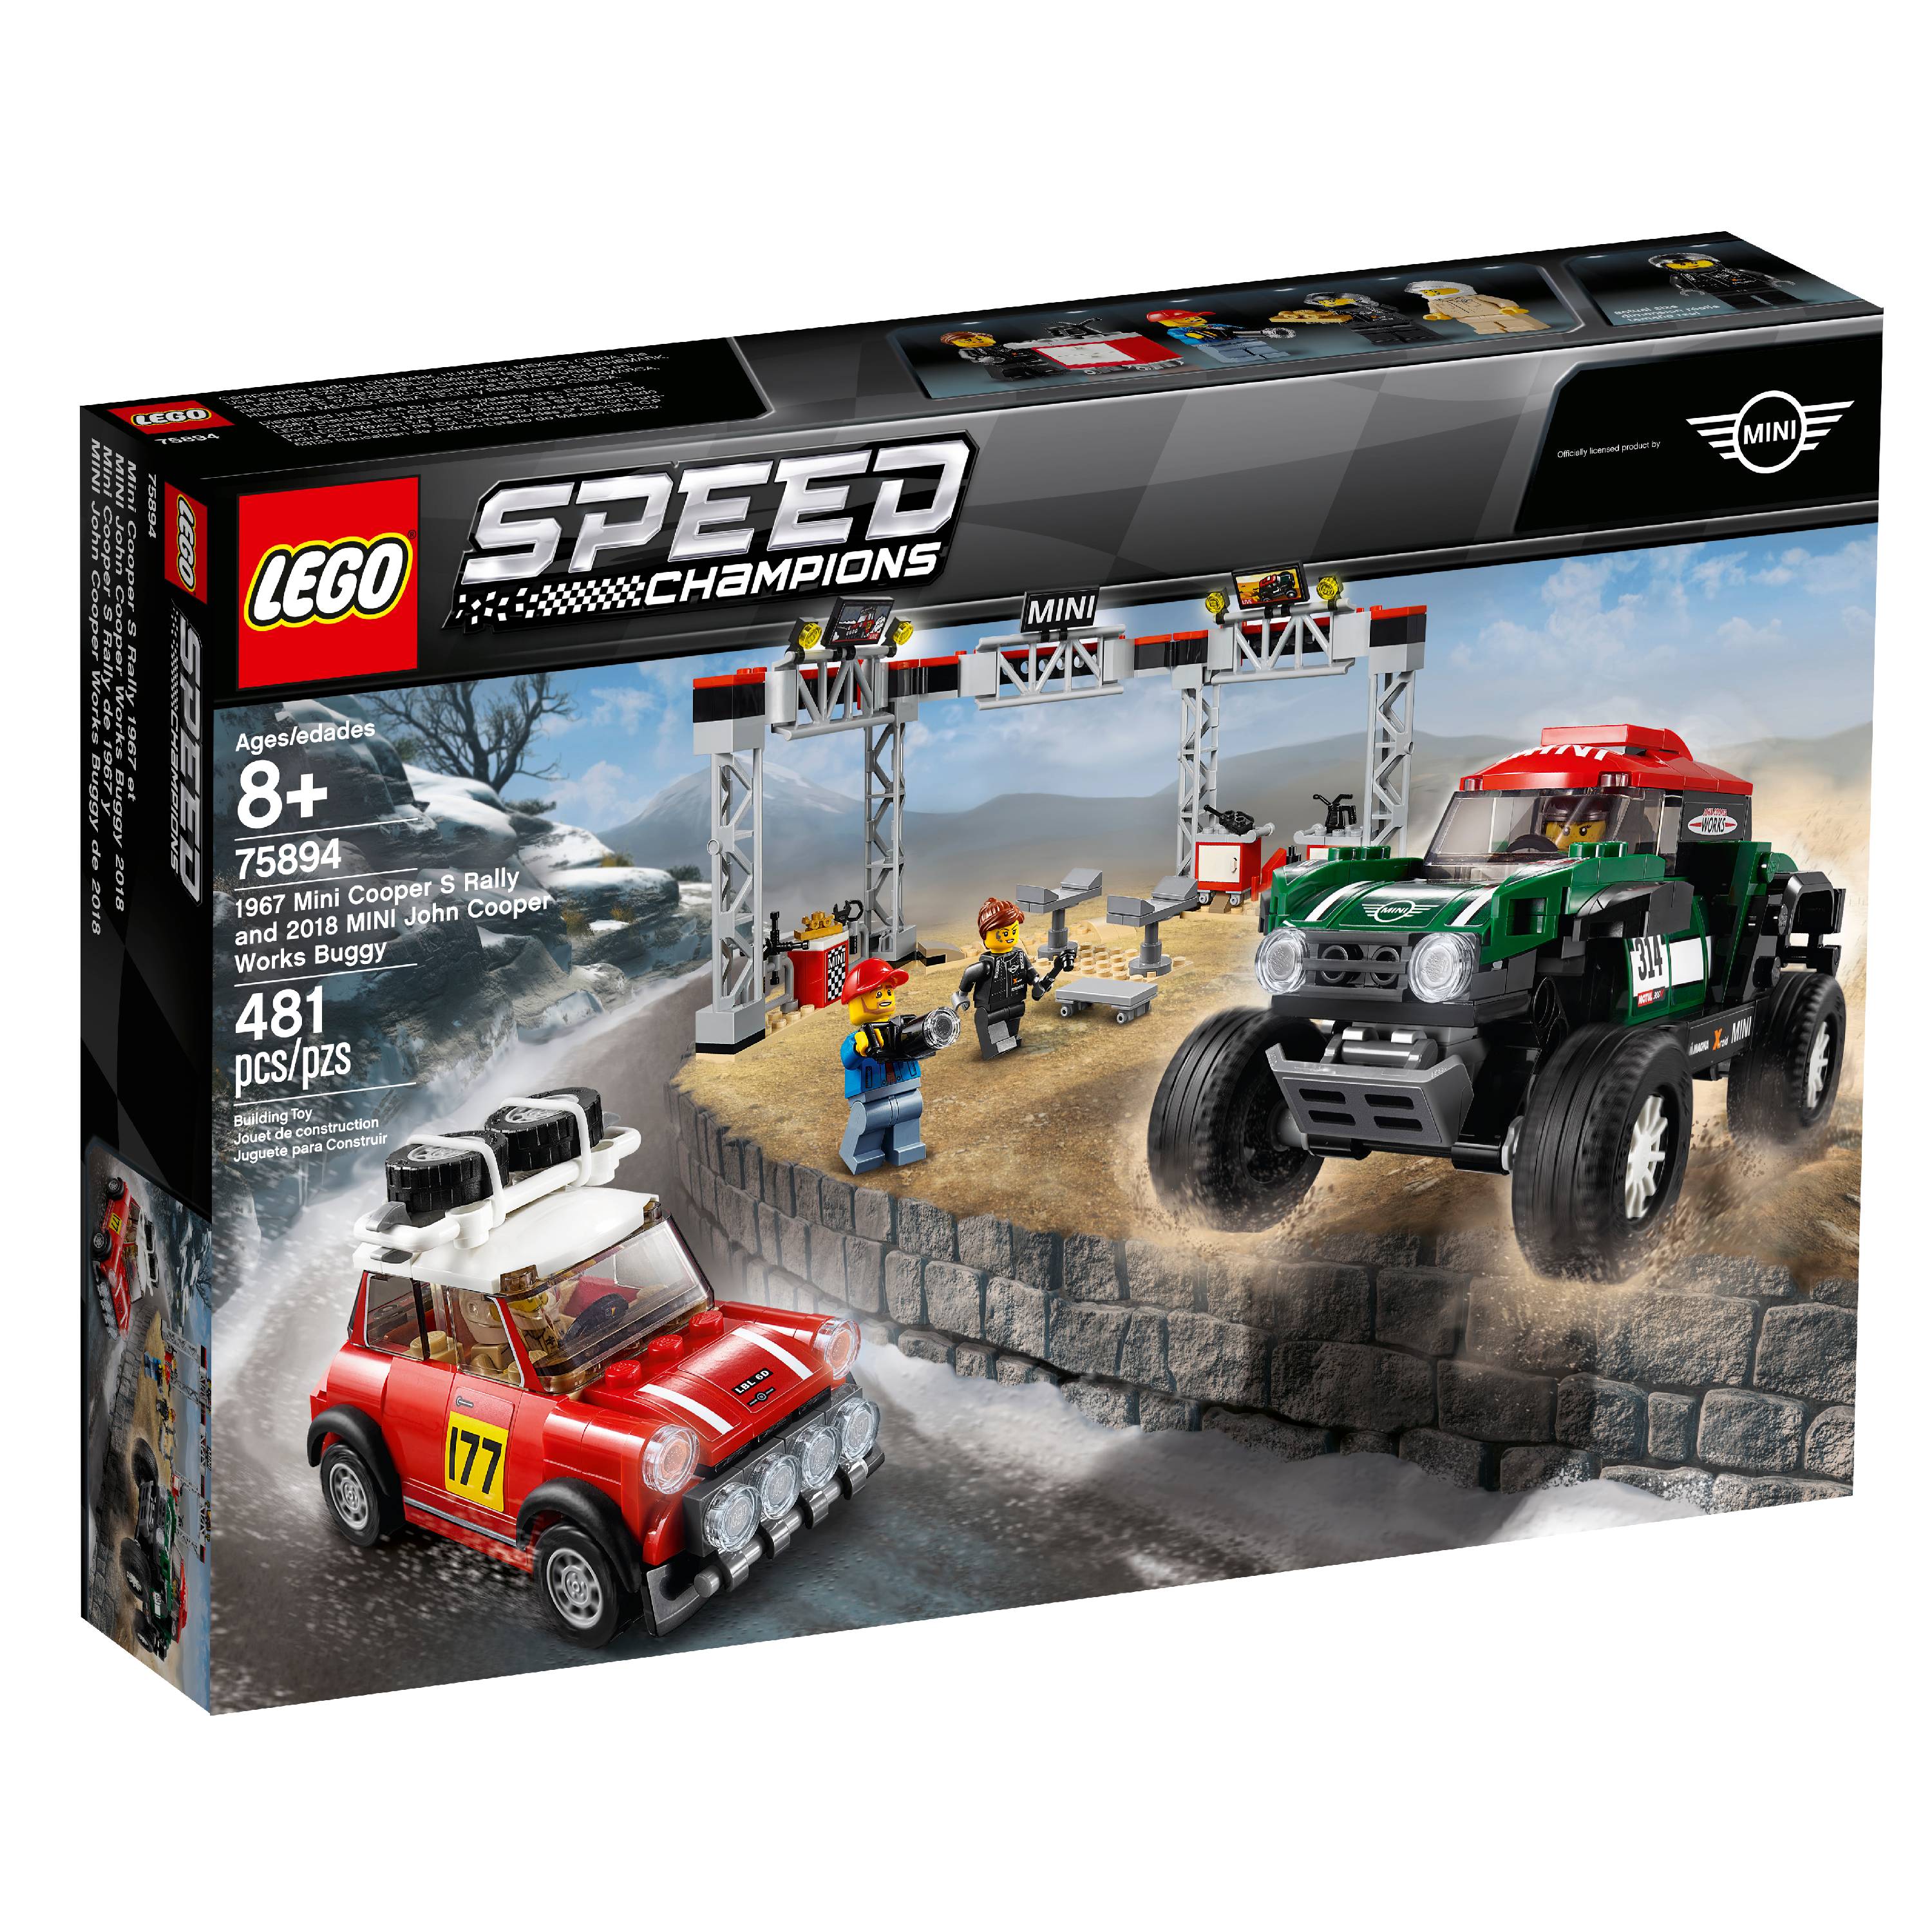 LEGO Speed Champions 1967 Mini Cooper S Rally and 2018 MINI J 75894 - image 4 of 7